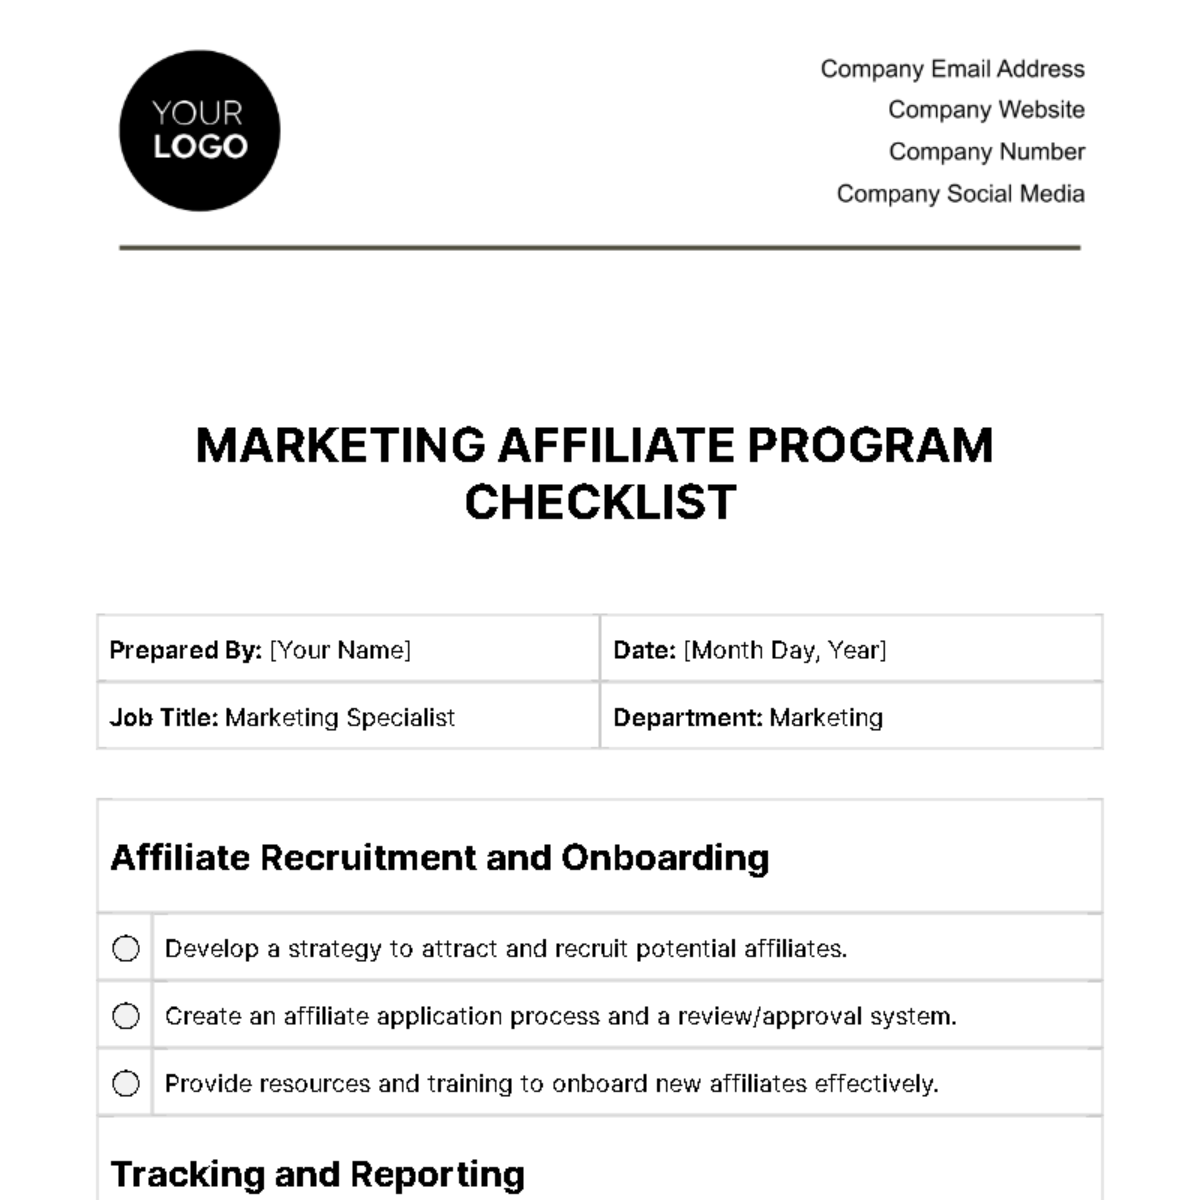 Marketing Affiliate Program Checklist Template